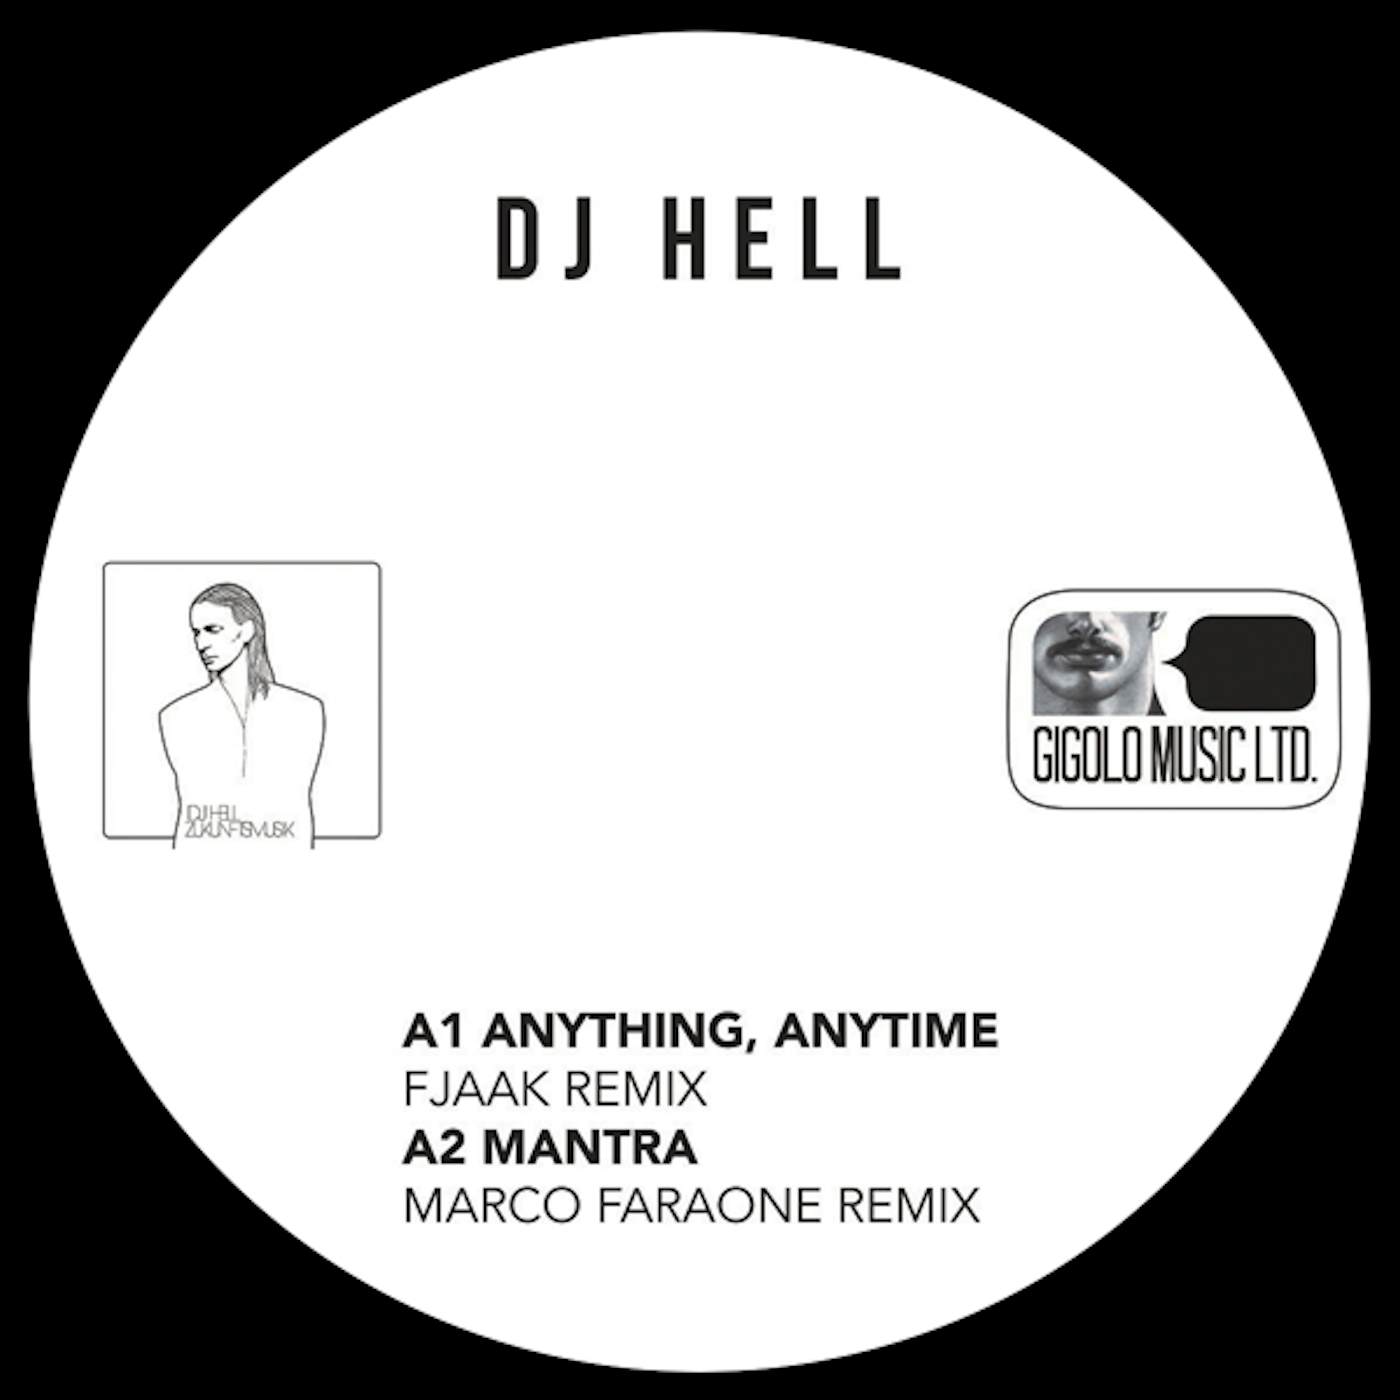 DJ Hell VARIOUS TITLES Vinyl Record